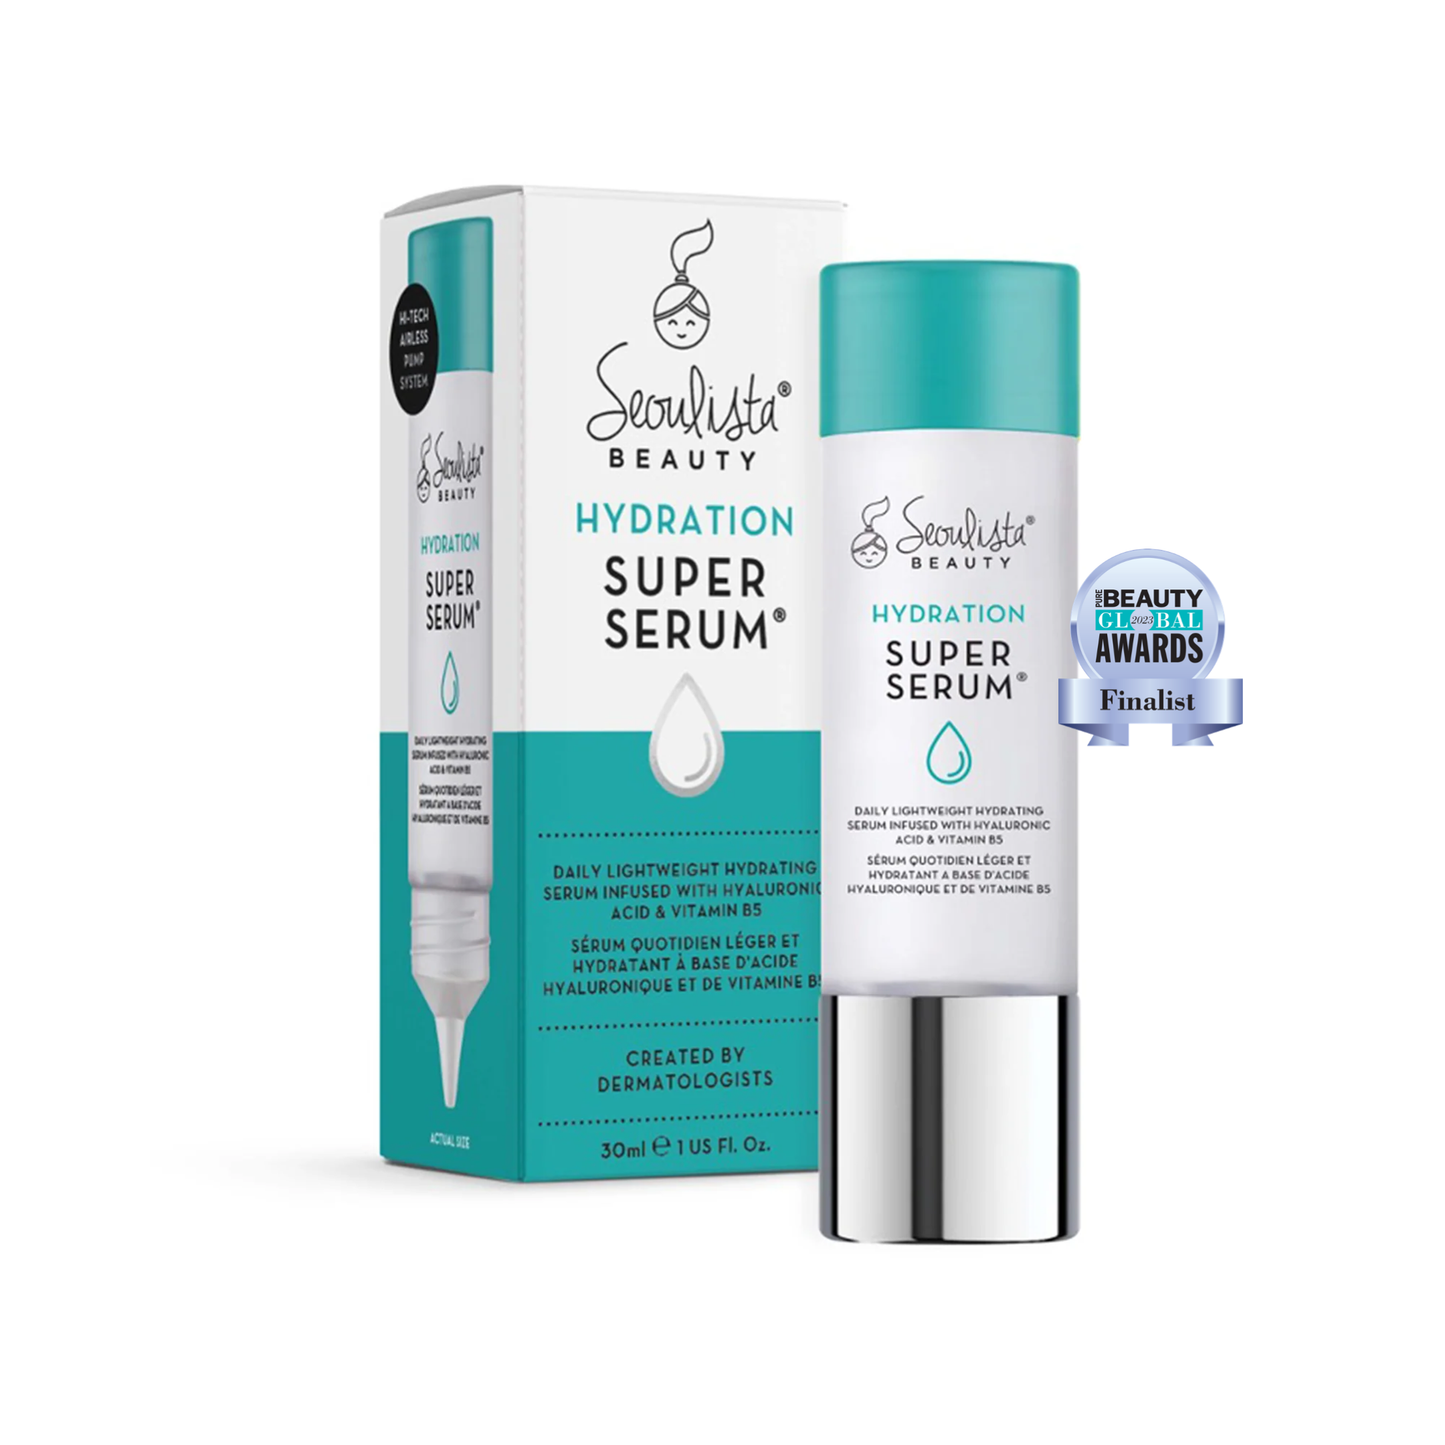 Seoulista Hydration Super Serum® - Seoulista Beauty